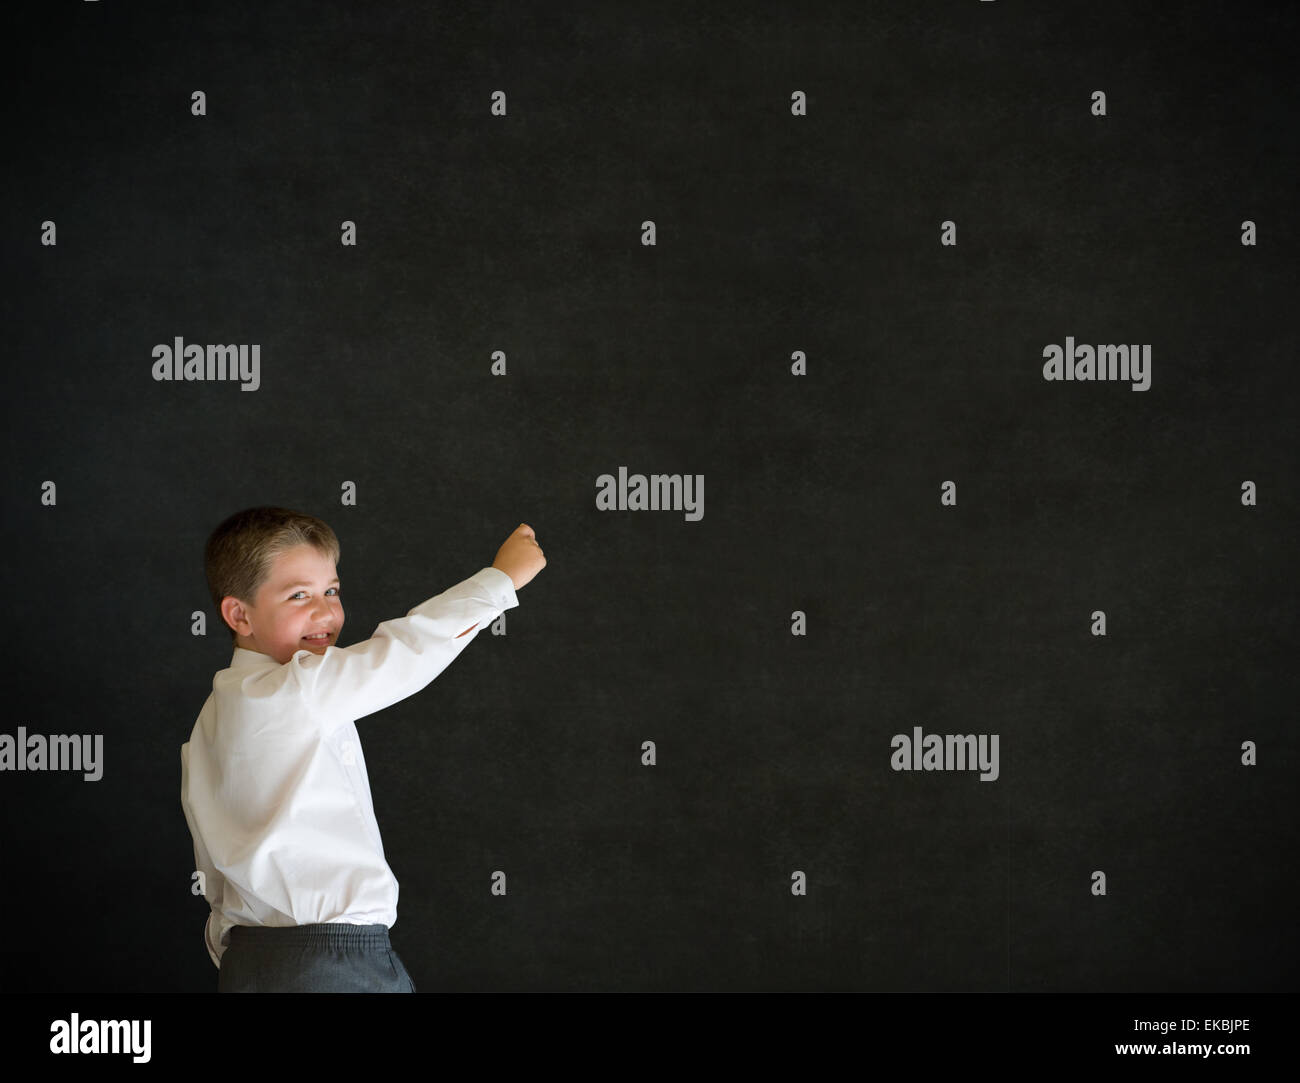 Boy dressed up as businessman writing on blackboard Stock Photo